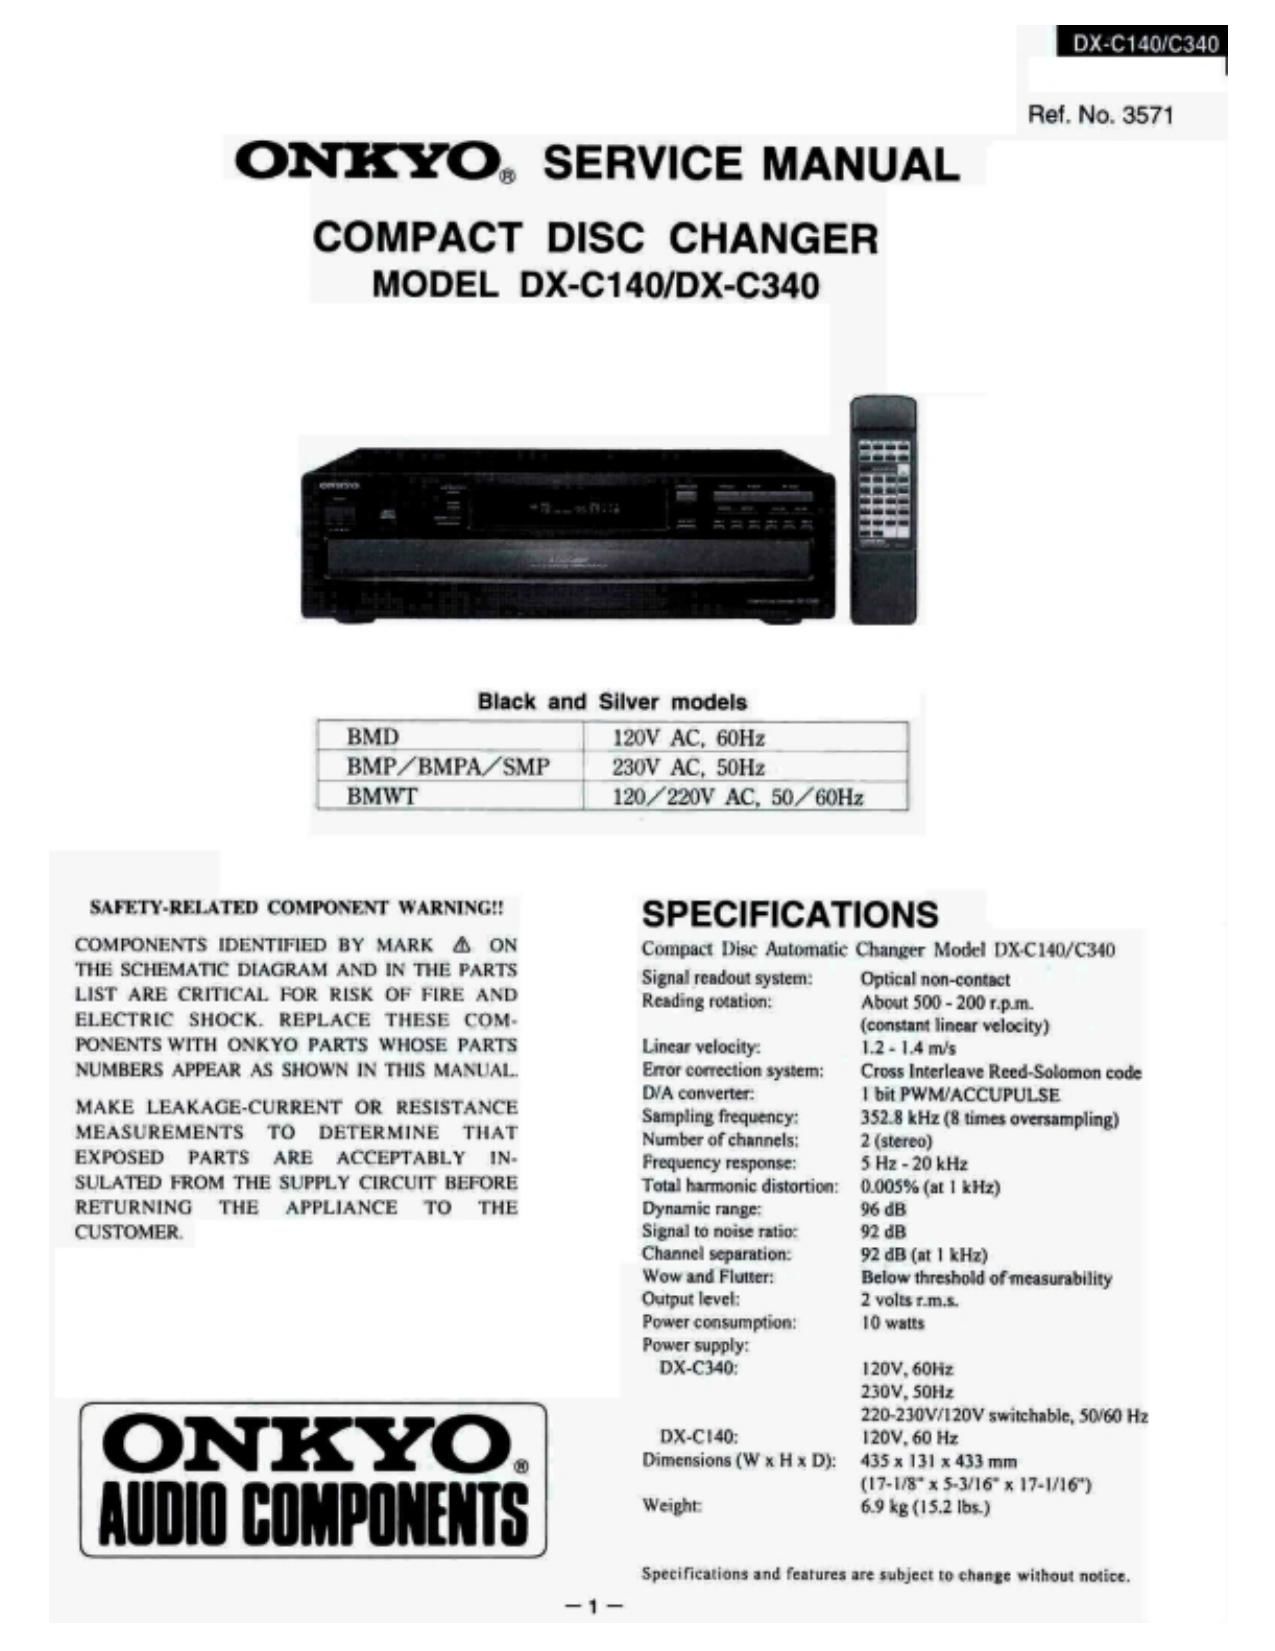 Onkyo DXC 340 Service Manual